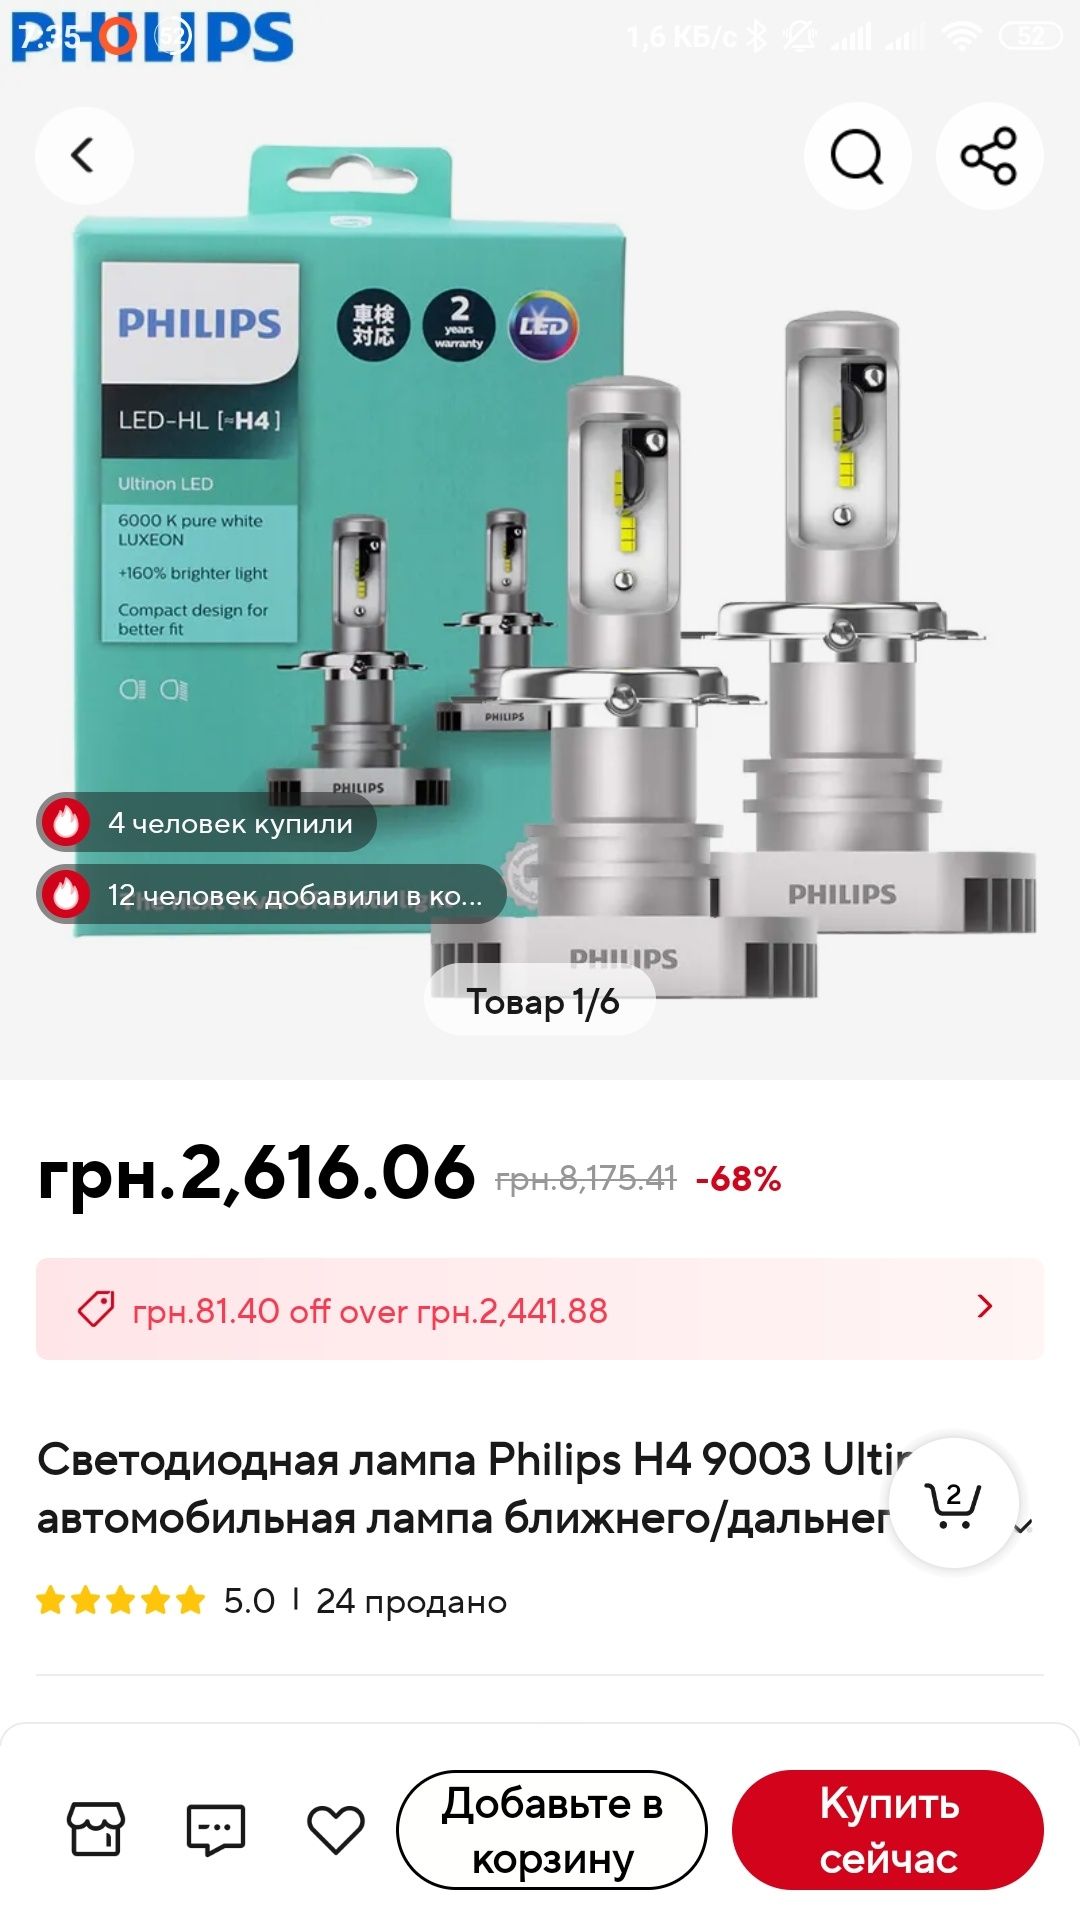 Лампы светодиодные Philips H4 Ultinon Led +160% (11342ULWX2)